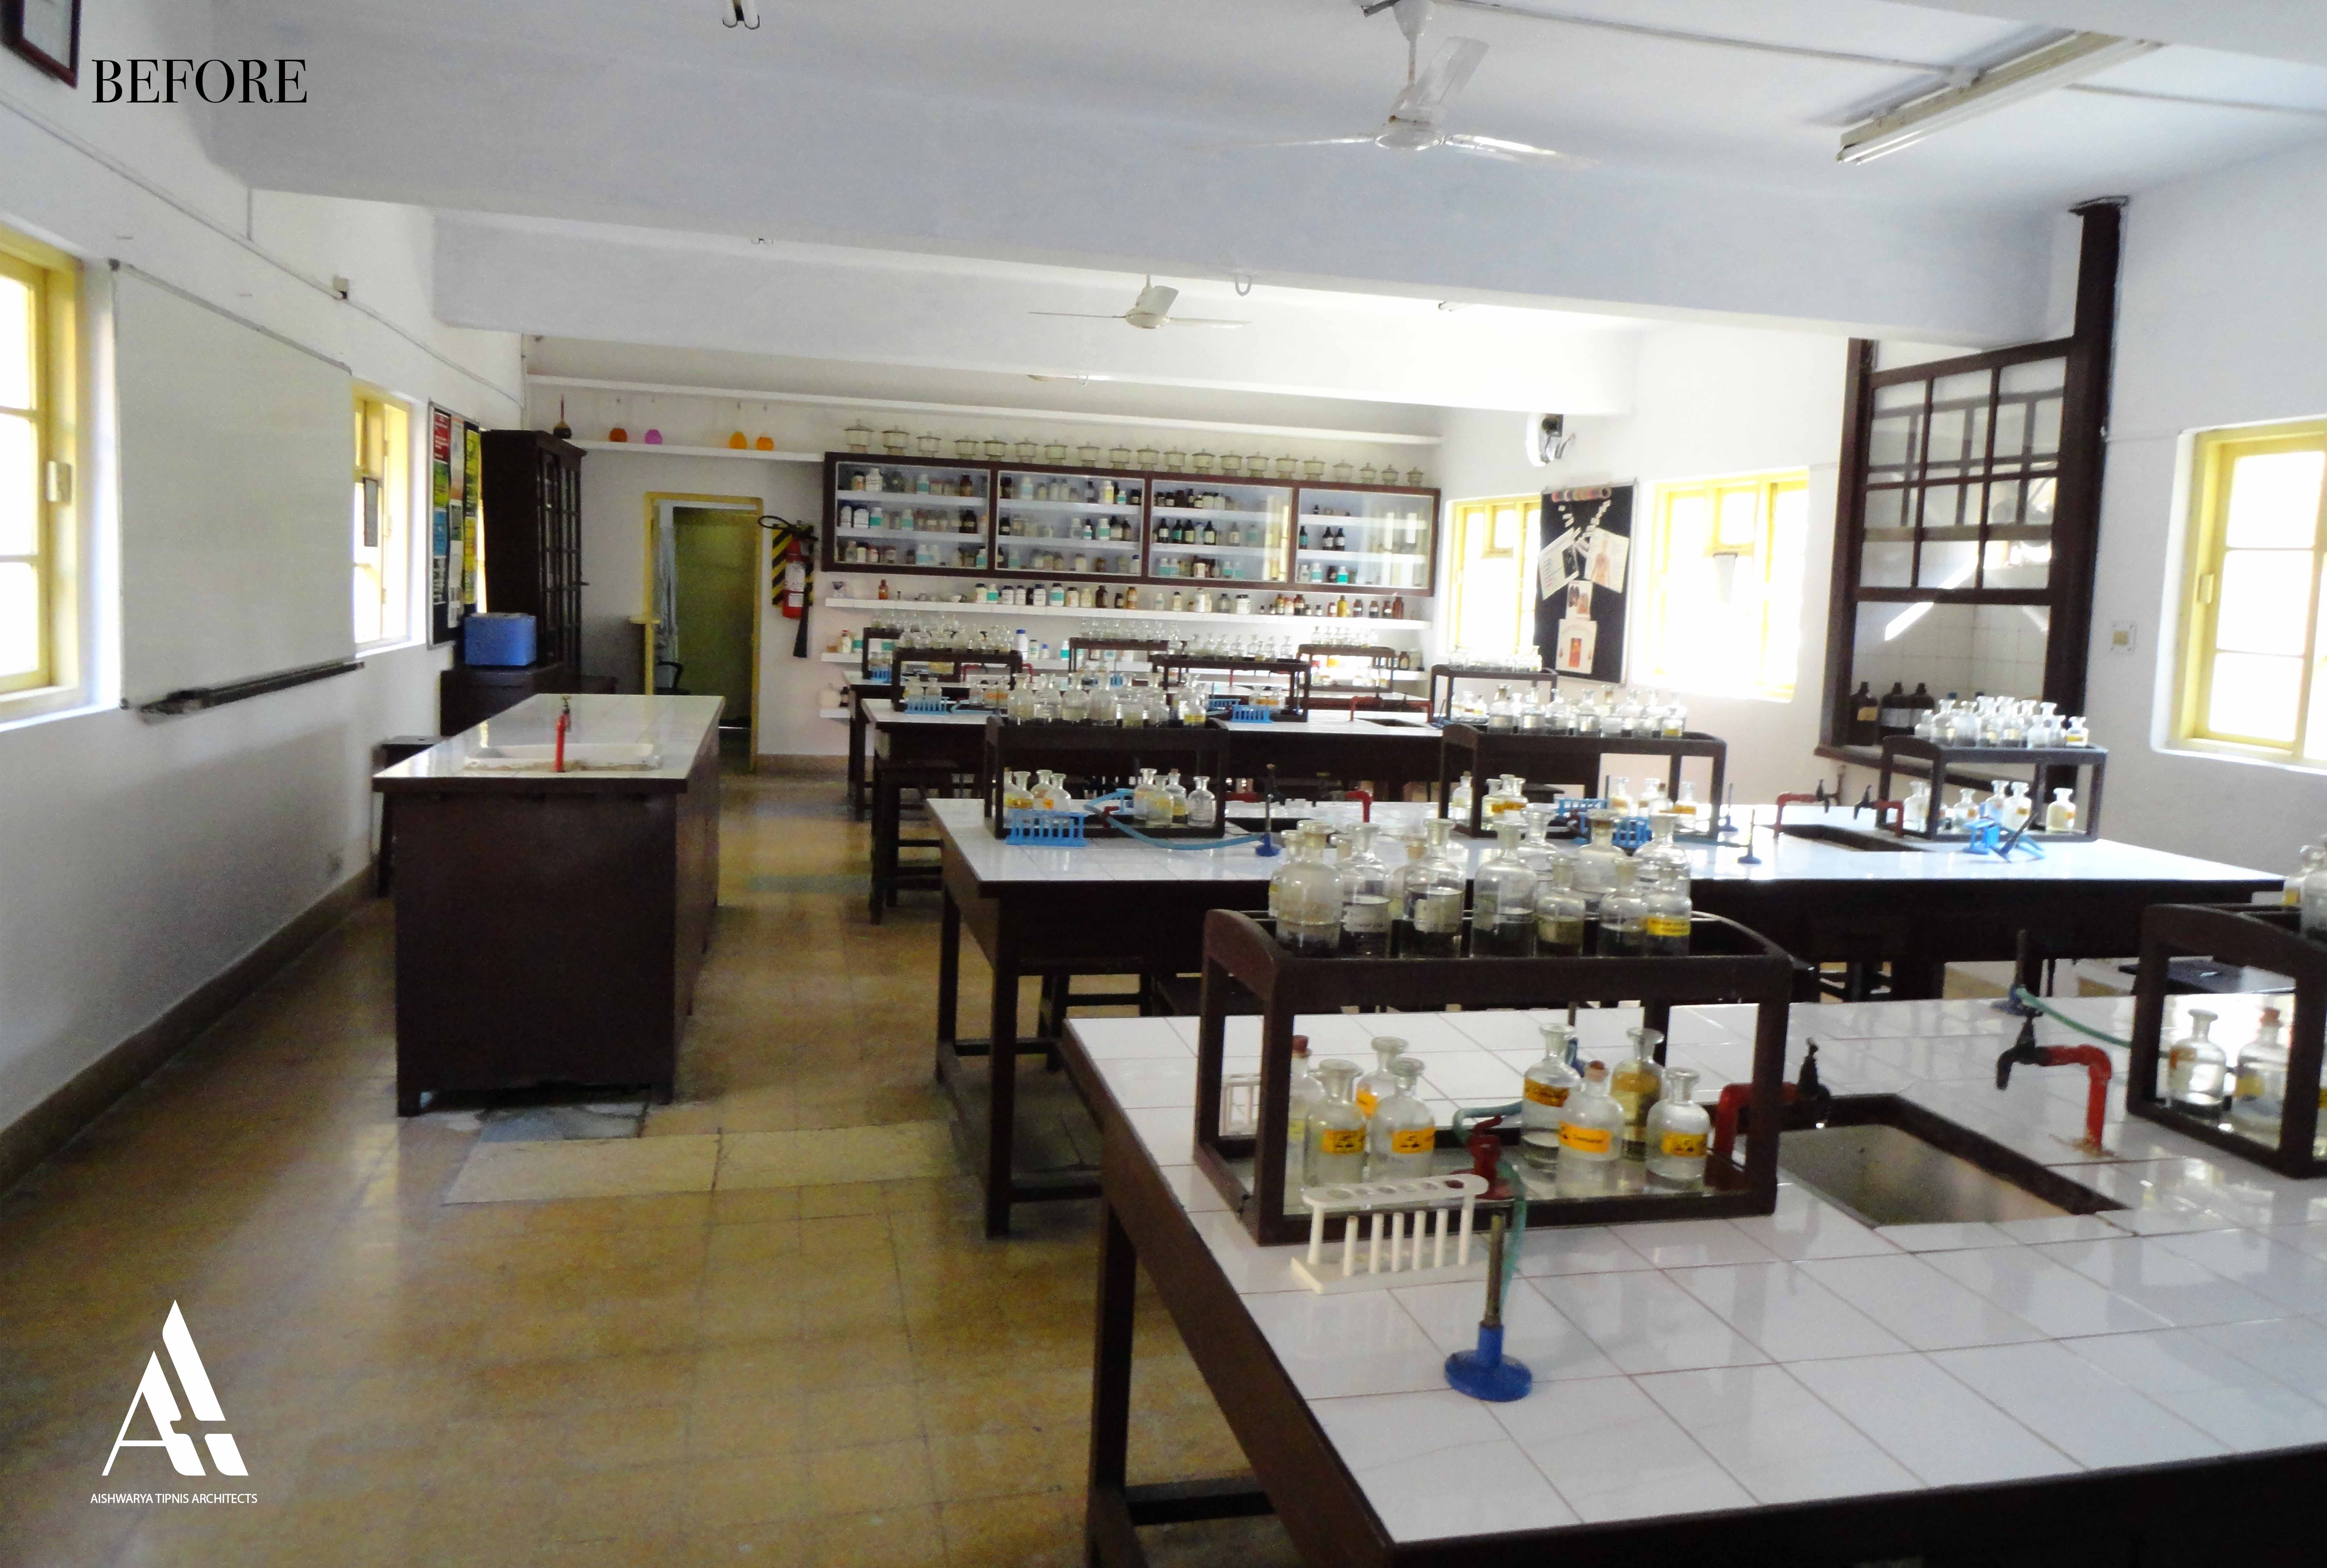 Upgradation of Science Laboratories, The Doon School